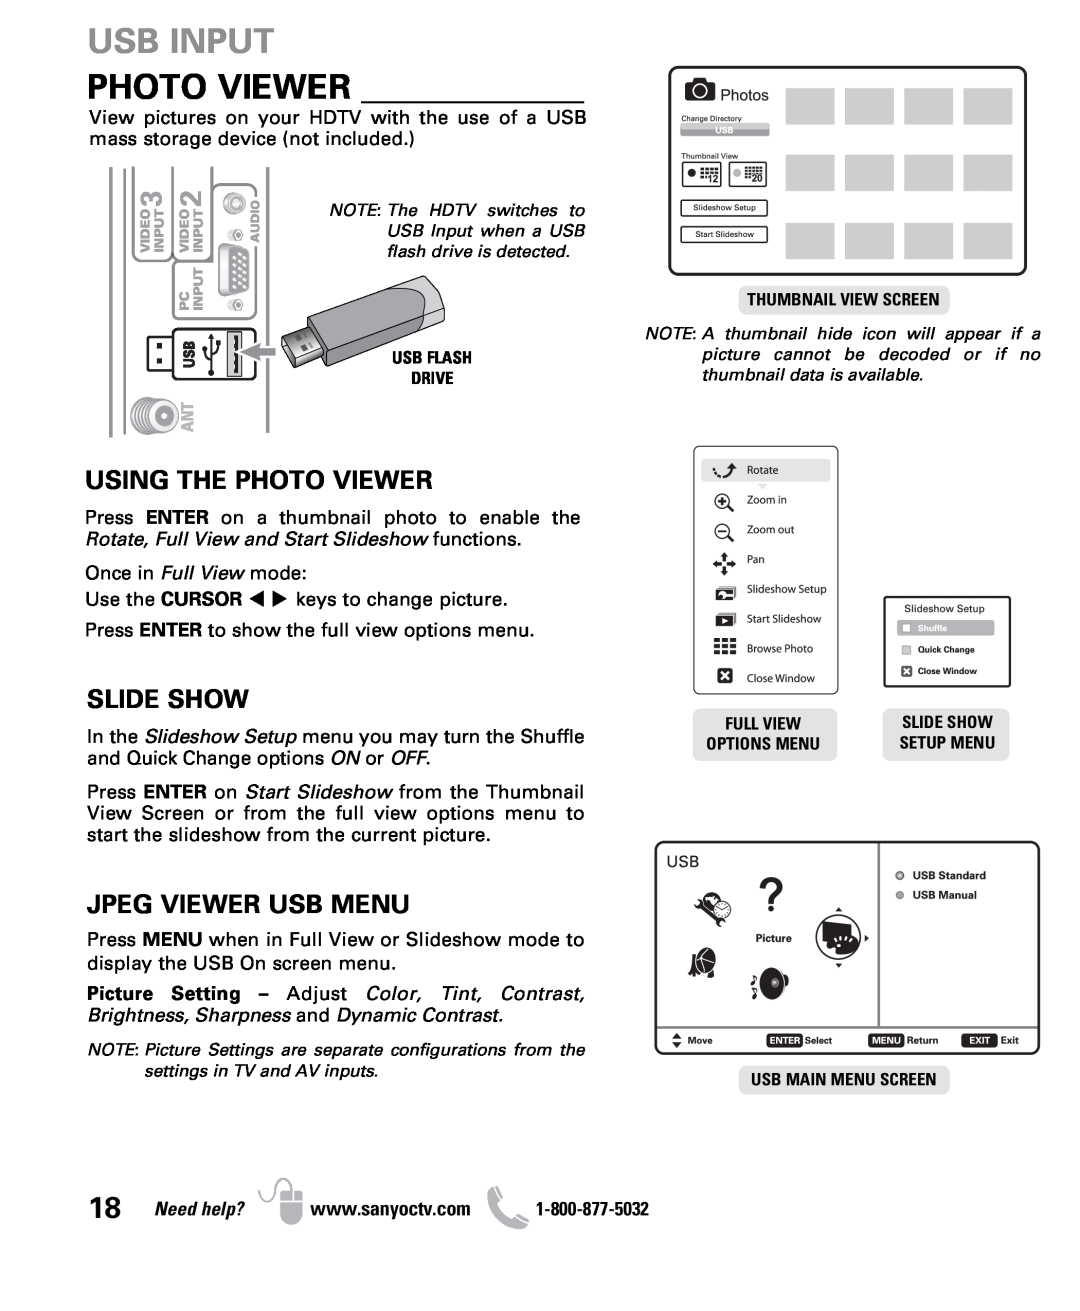 Sanyo DP50710 owner manual Usb Input, Using The Photo Viewer, Slide Show, Jpeg Viewer Usb Menu, Need help? 